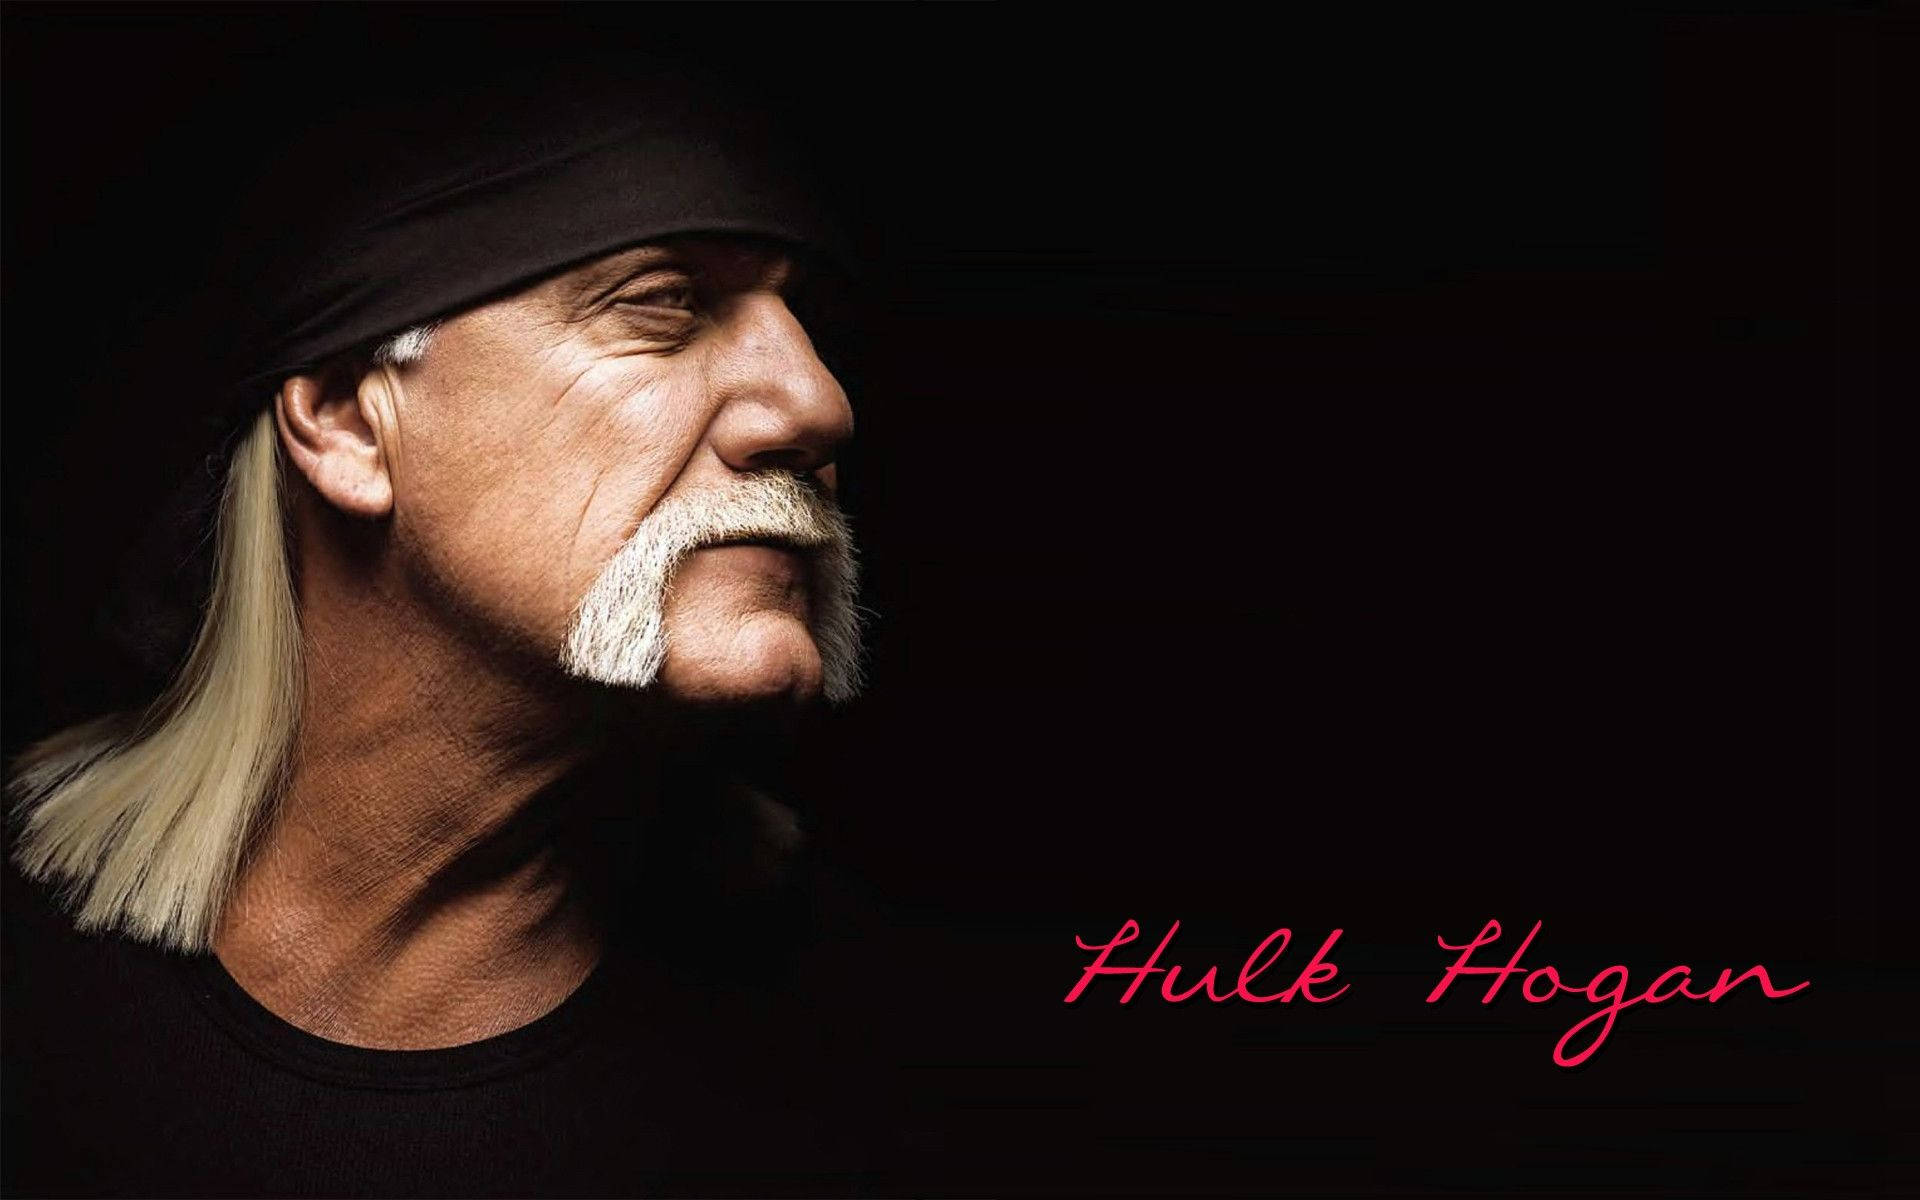 Hulk Hogan Dark Aesthetic Background